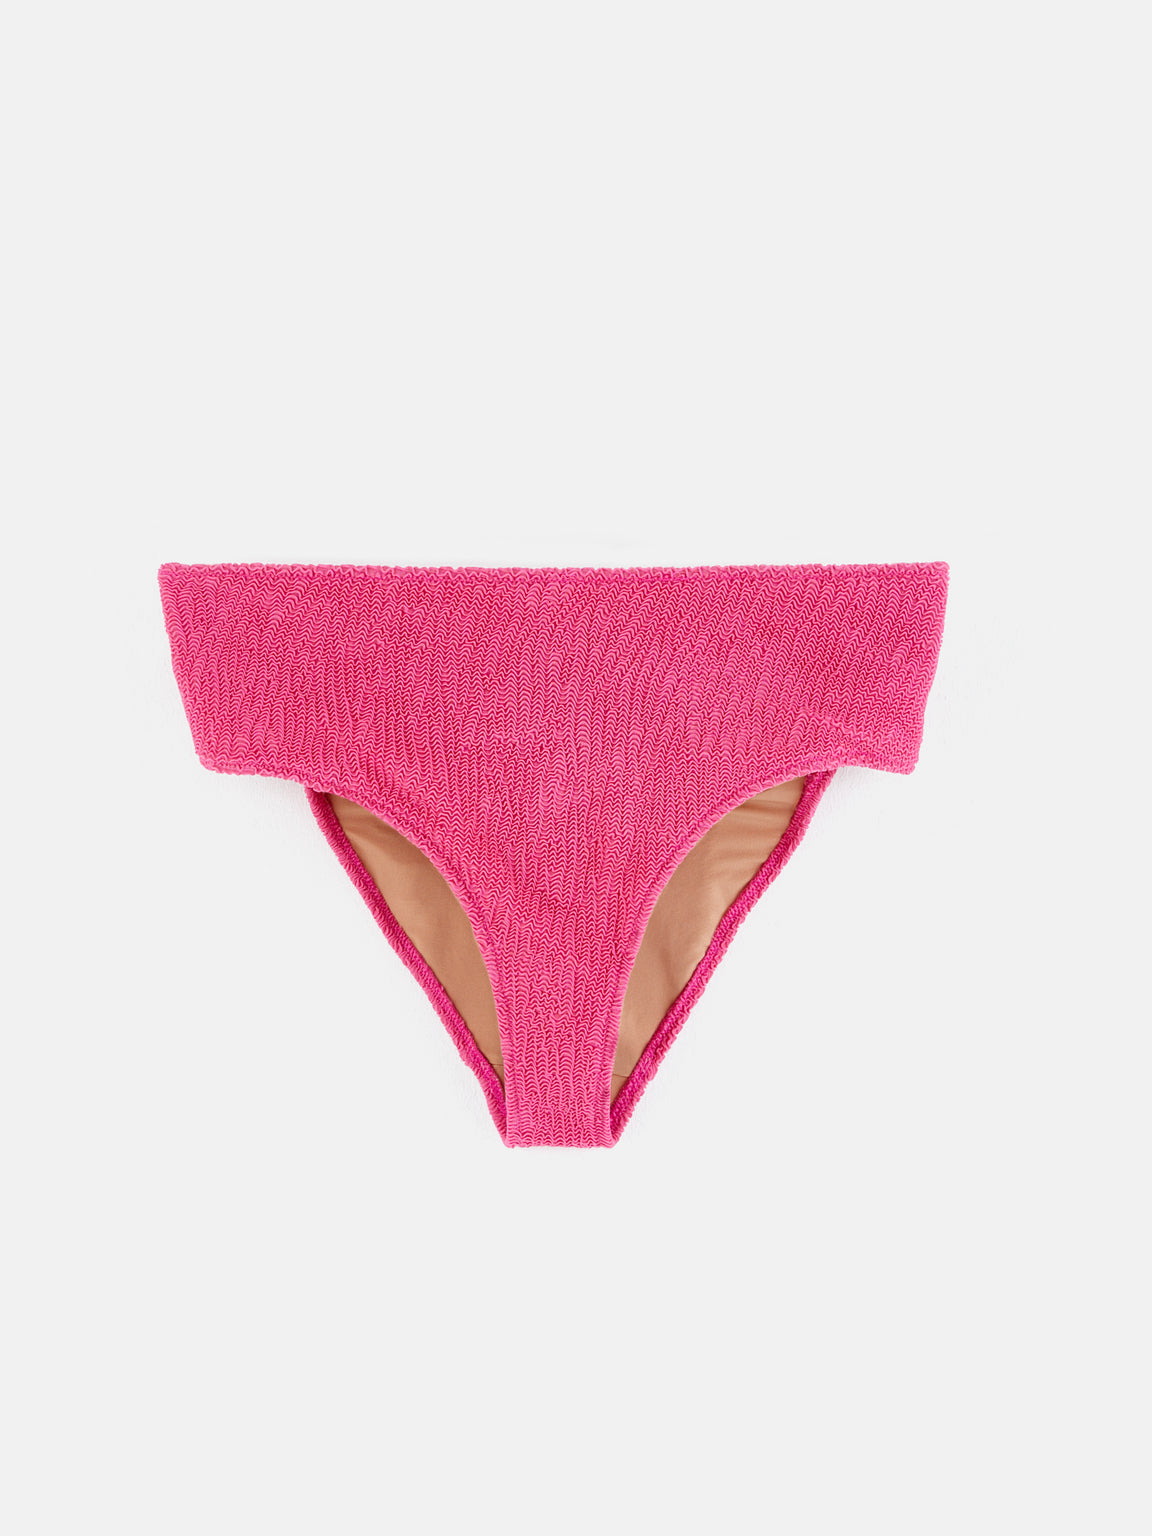 Oas | Caprice Riva Bikini Bottom | E-shop Bellerose